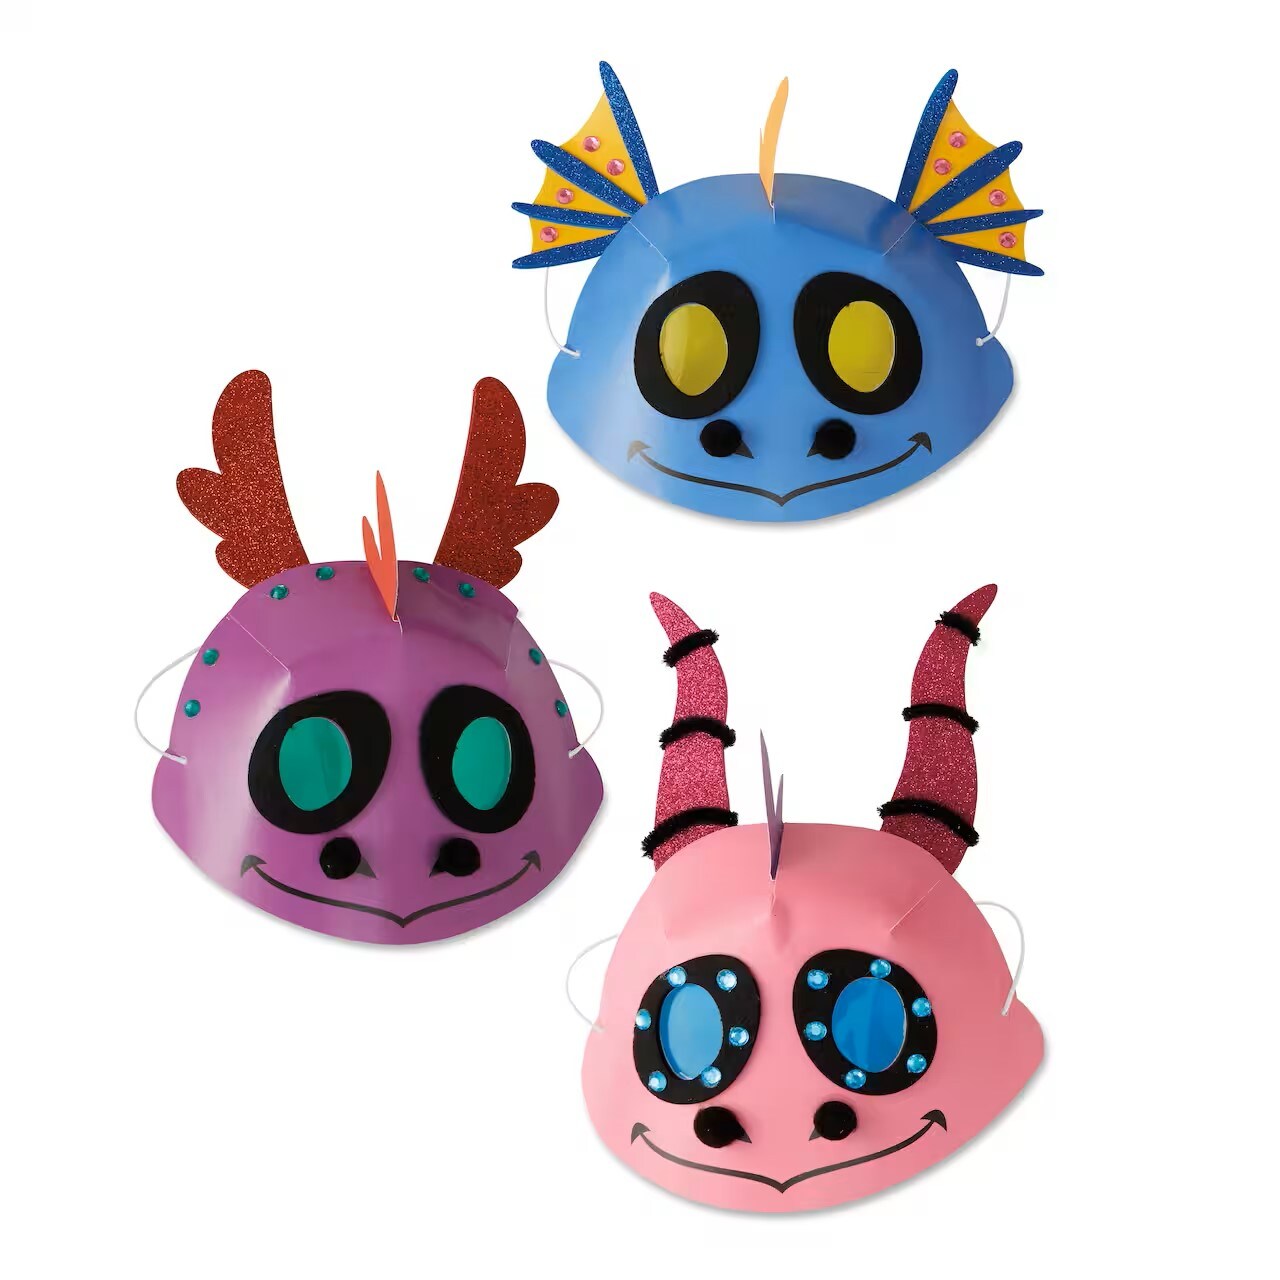 Kids Club Alien Sensory Play and Alien Masks